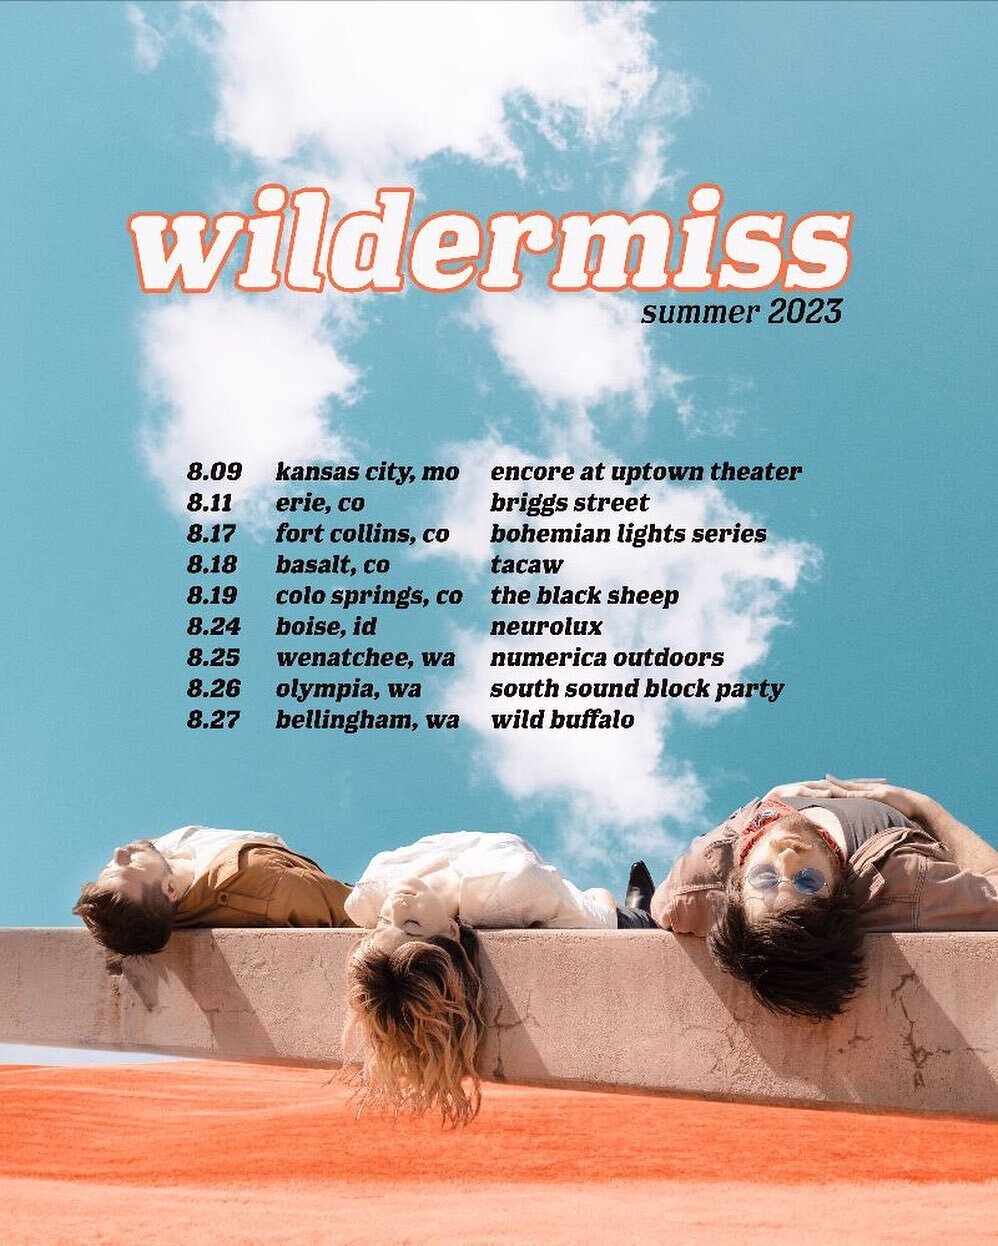 Wildermiss summer tour dates have arrived!